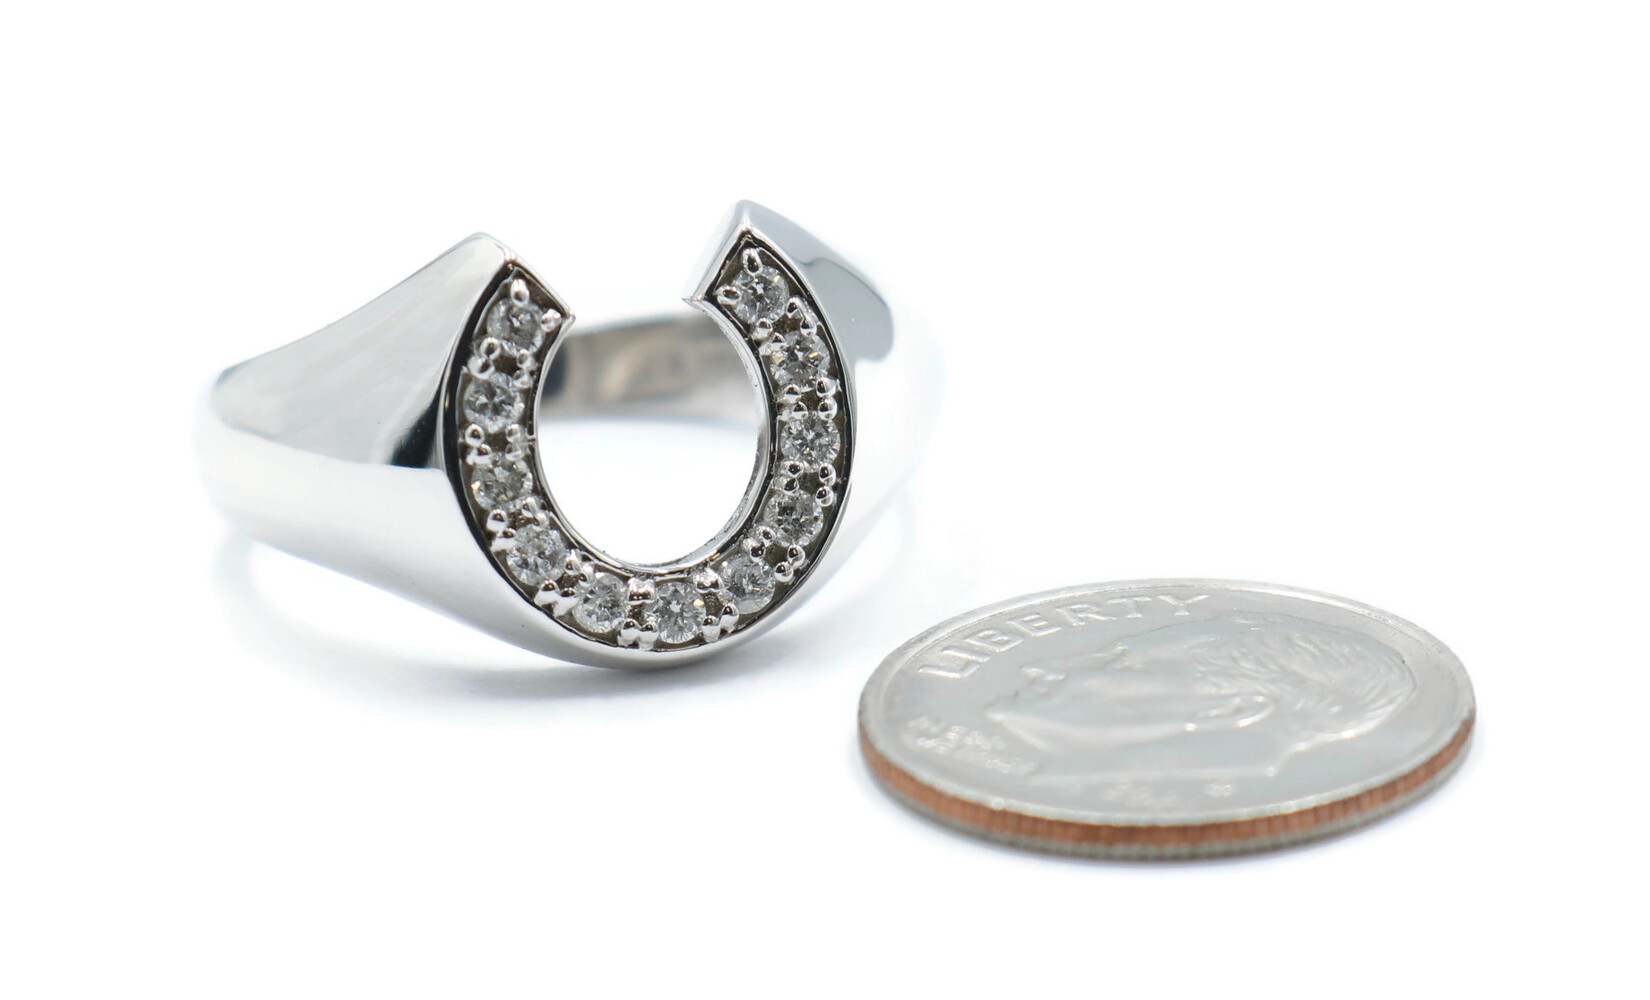 Rodeo Diamond Horseshoe Style Men's Ring in Size 9.5 10KT White Gold 5.40 Grams